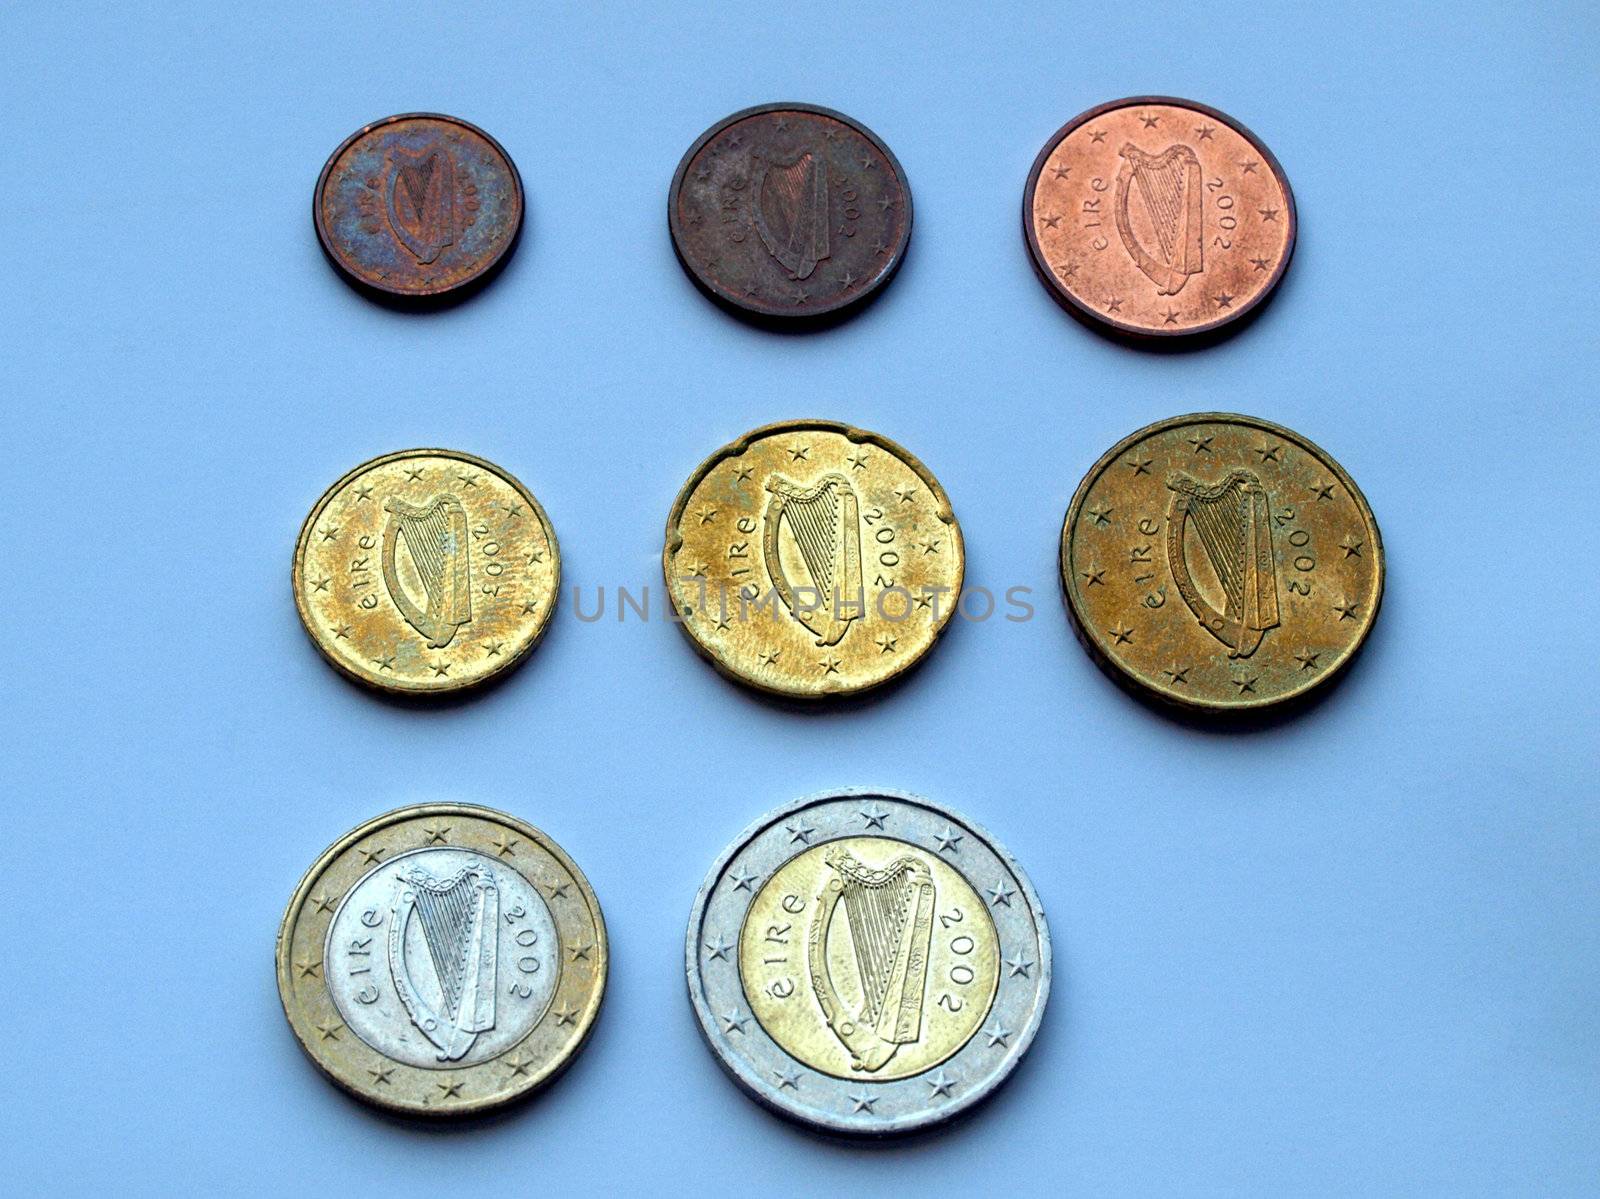 Full range of Euro coins from Ireland